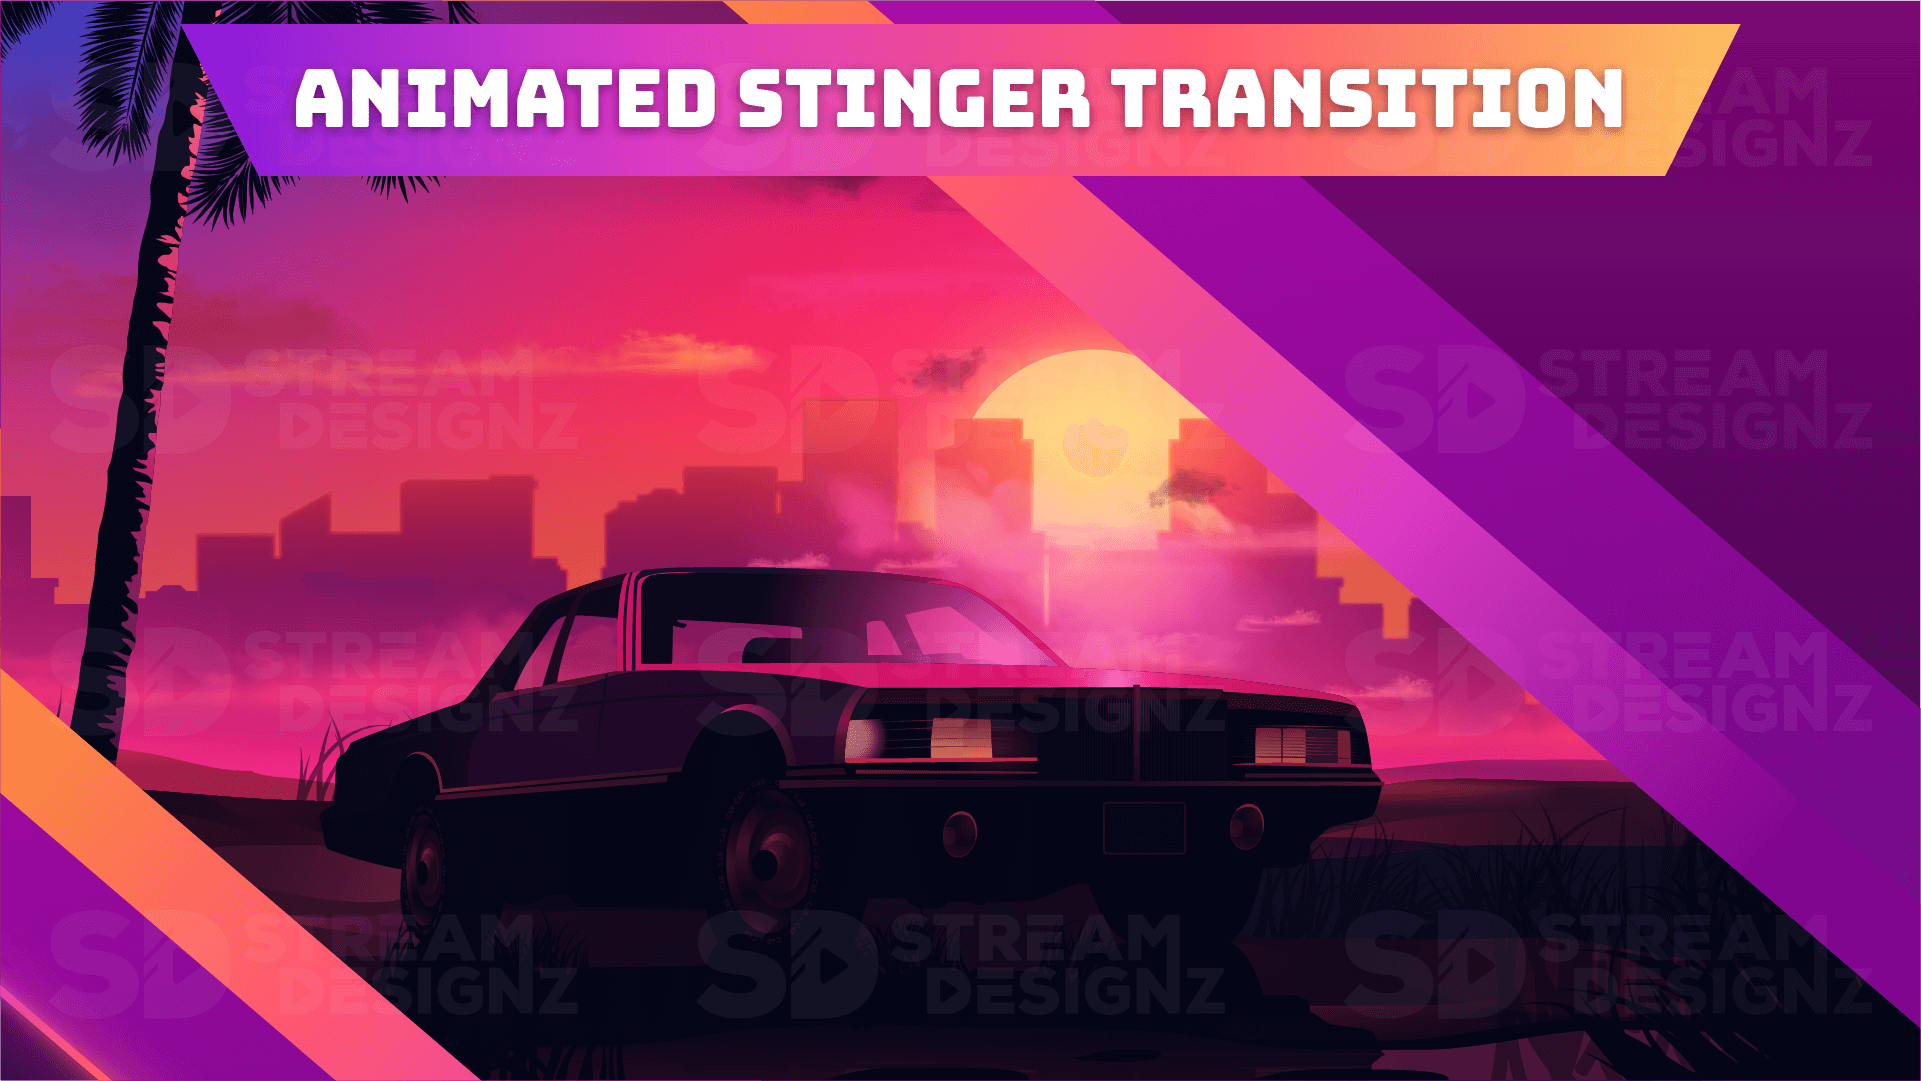 ultimate stream bundle sunset city stinger transition stream designz